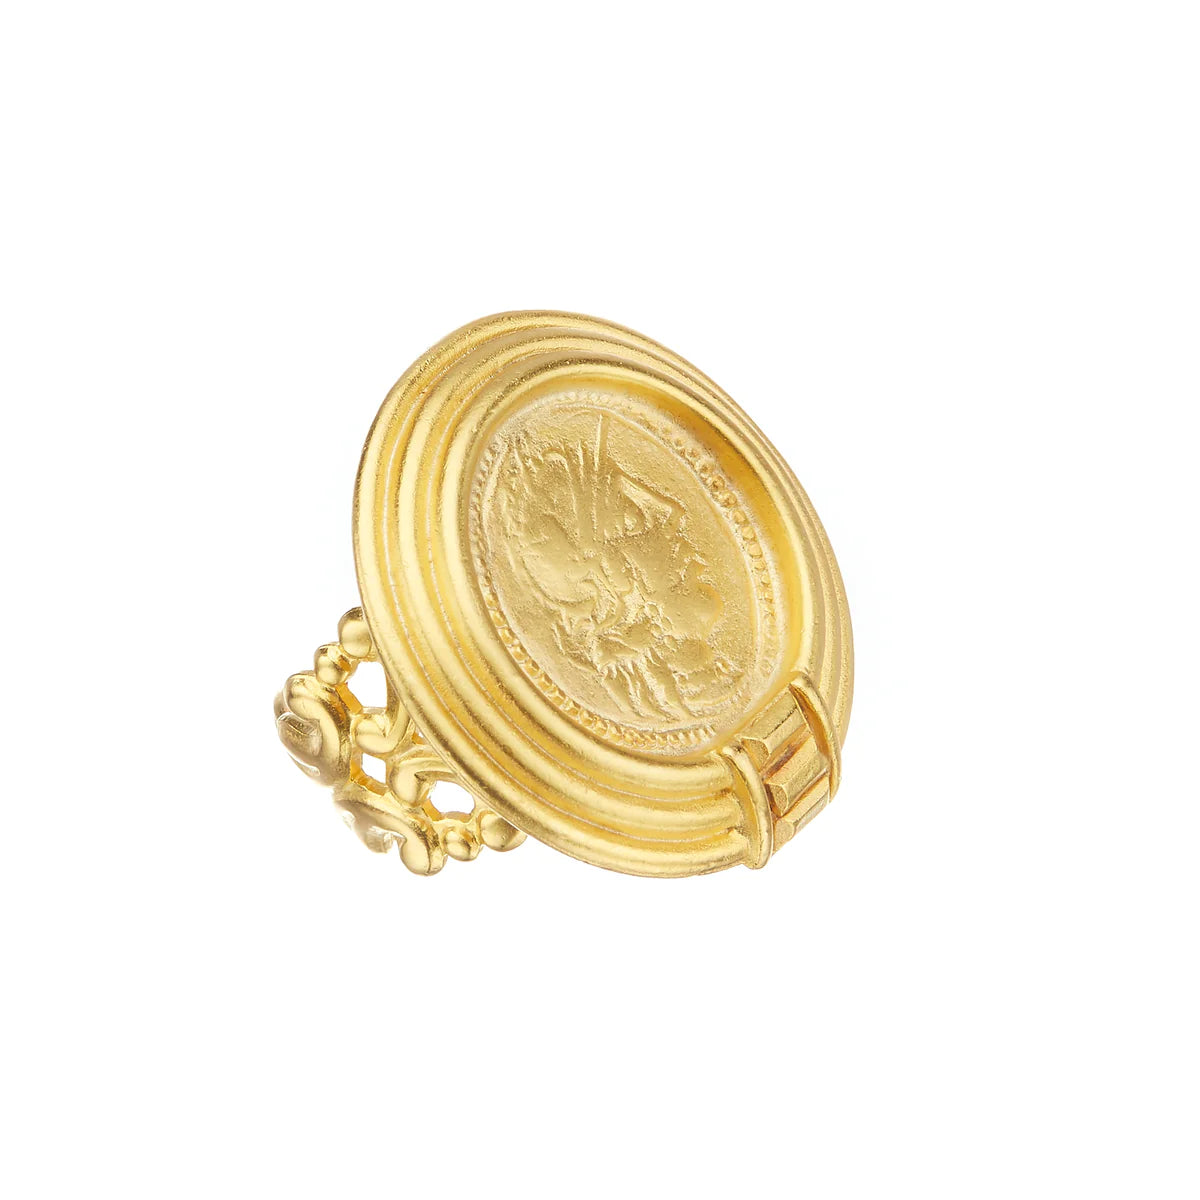 Susan Shaw 9961 Roma Coin Ring